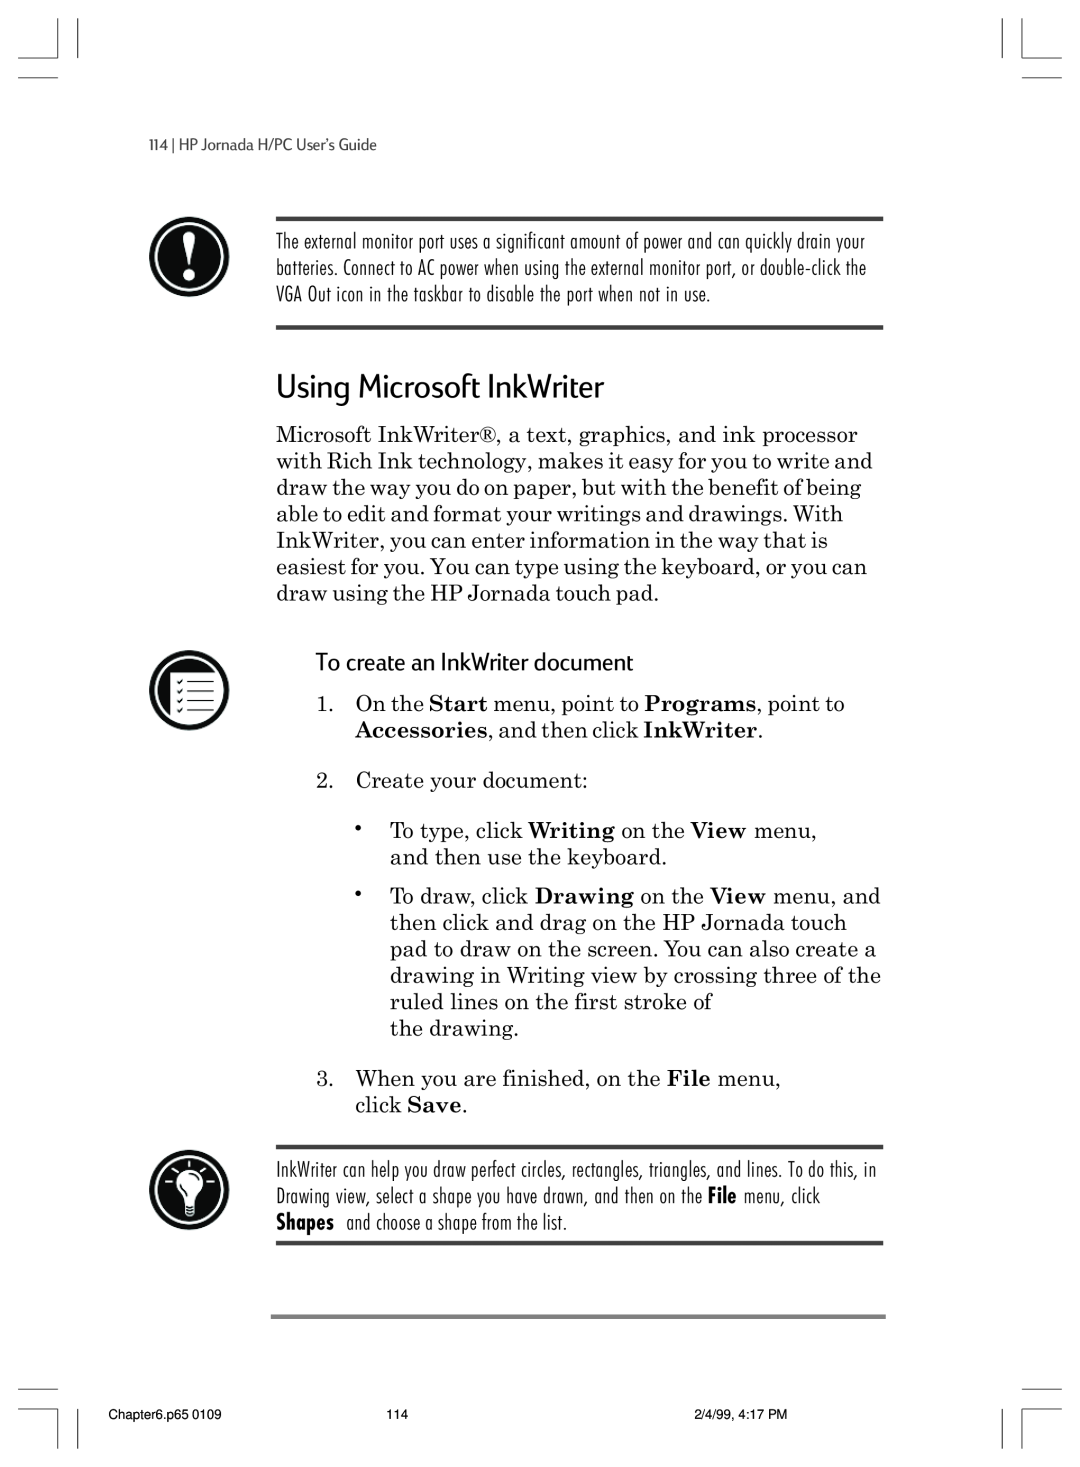 HP 820 E manual Using Microsoft InkWriter, To create an InkWriter document 